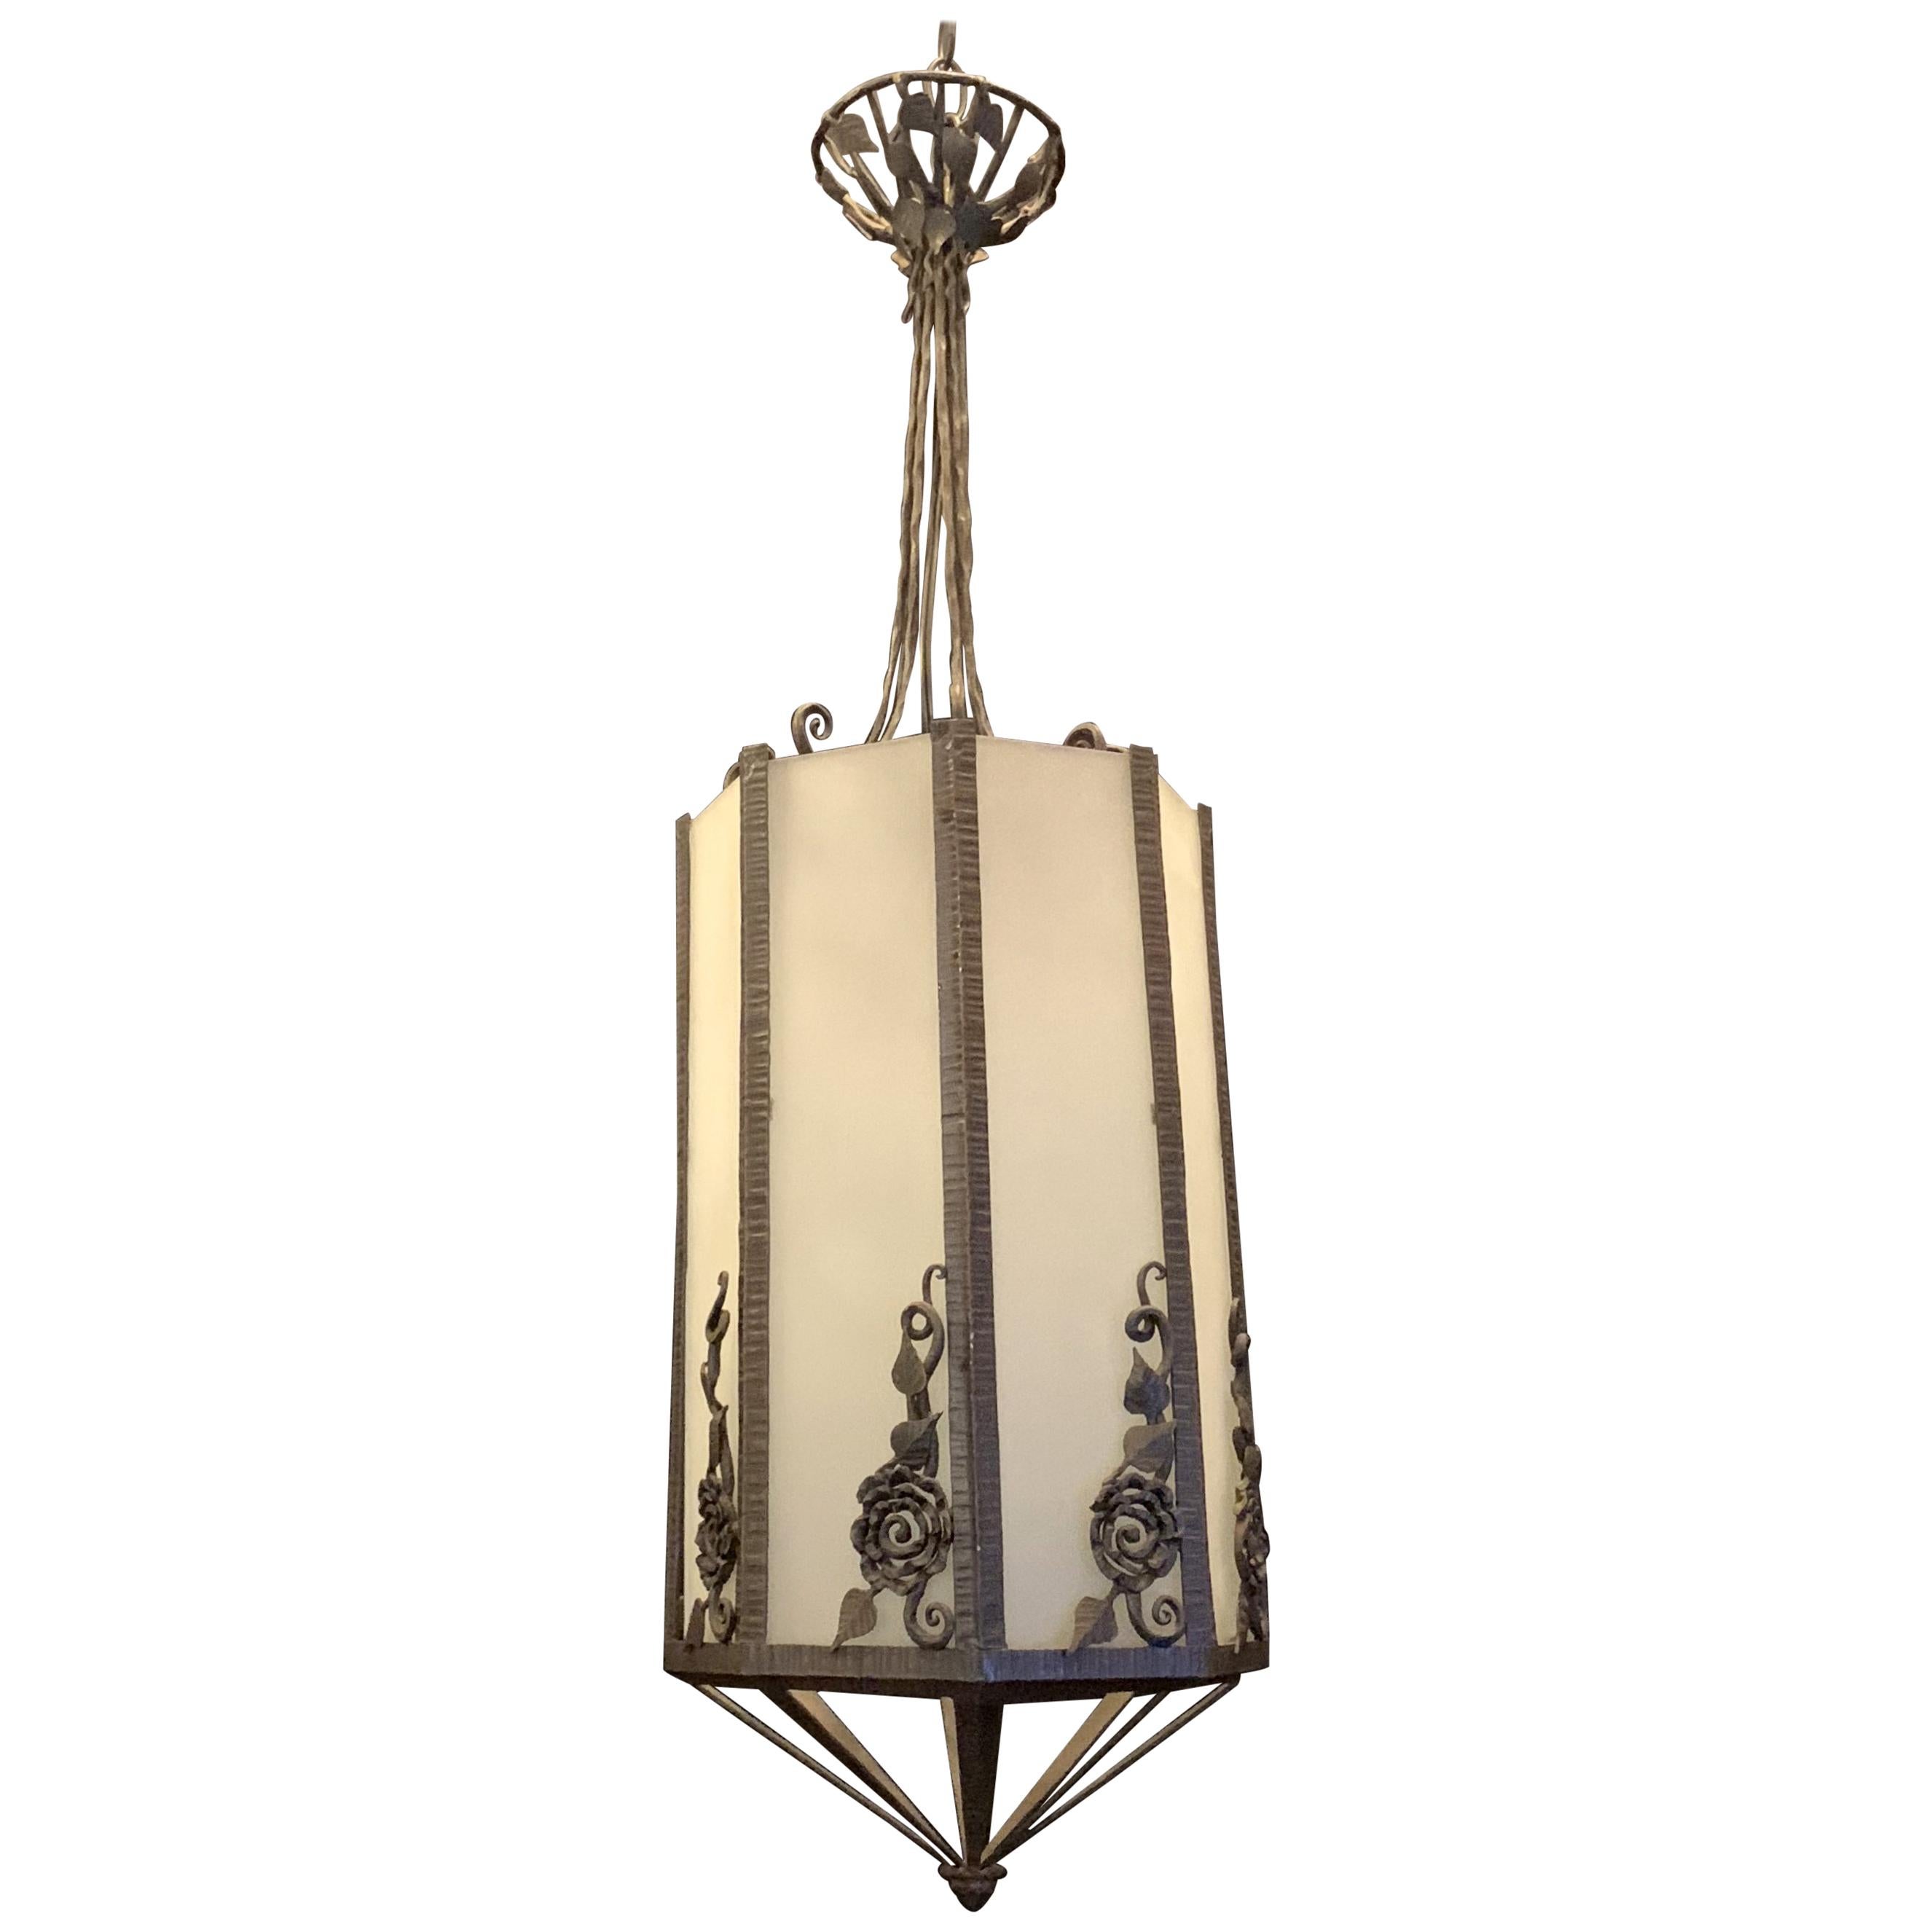 Wonderful Art Deco Edgar Brandt Scroll Flower Iron Frosted Glass Lantern Fixture For Sale